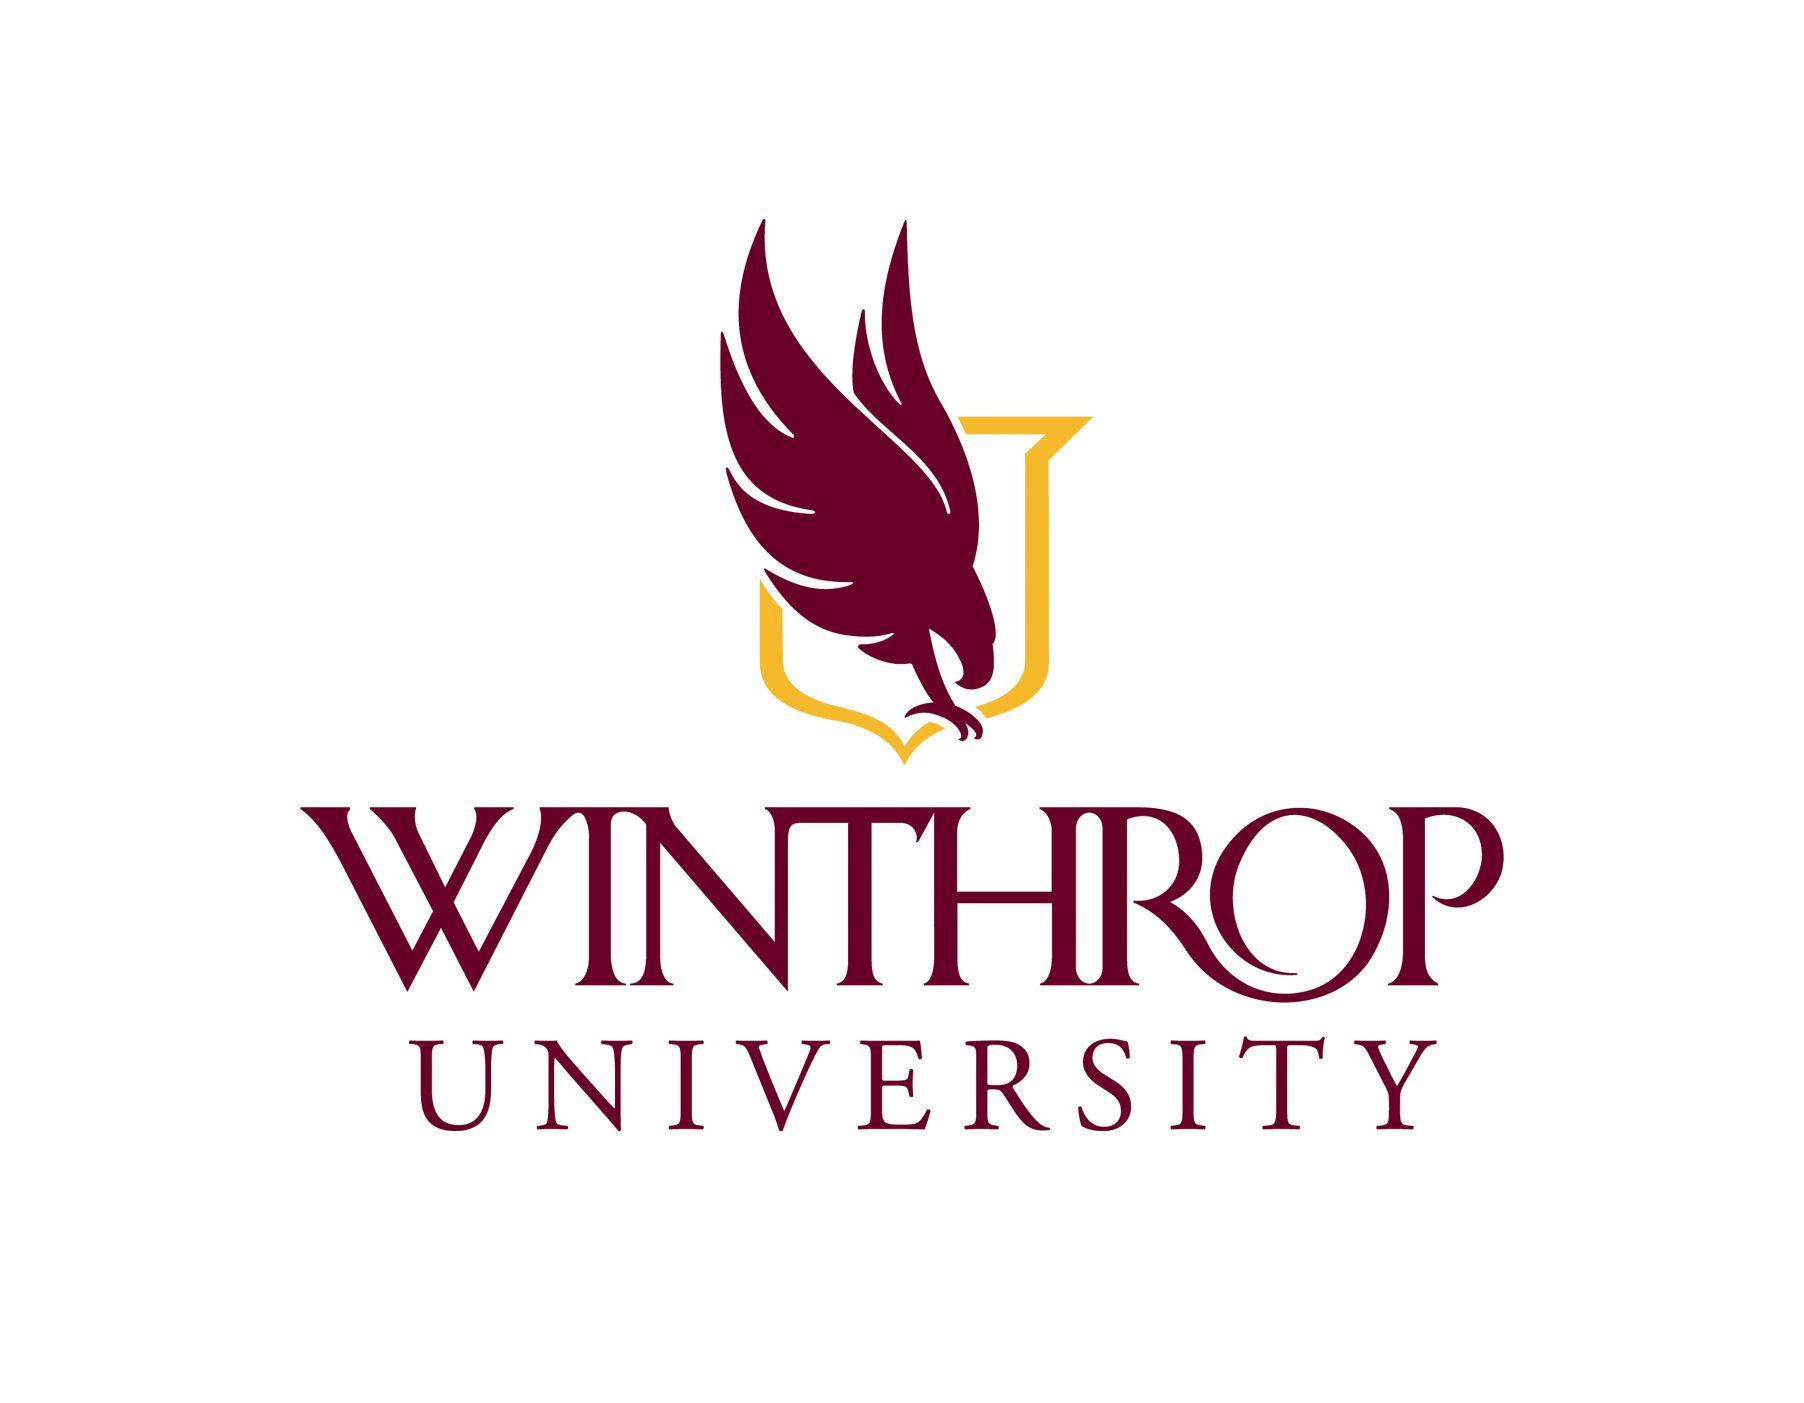 Winthrop Logo - Winthrop University. FMB Advertising Agency in Knoxville